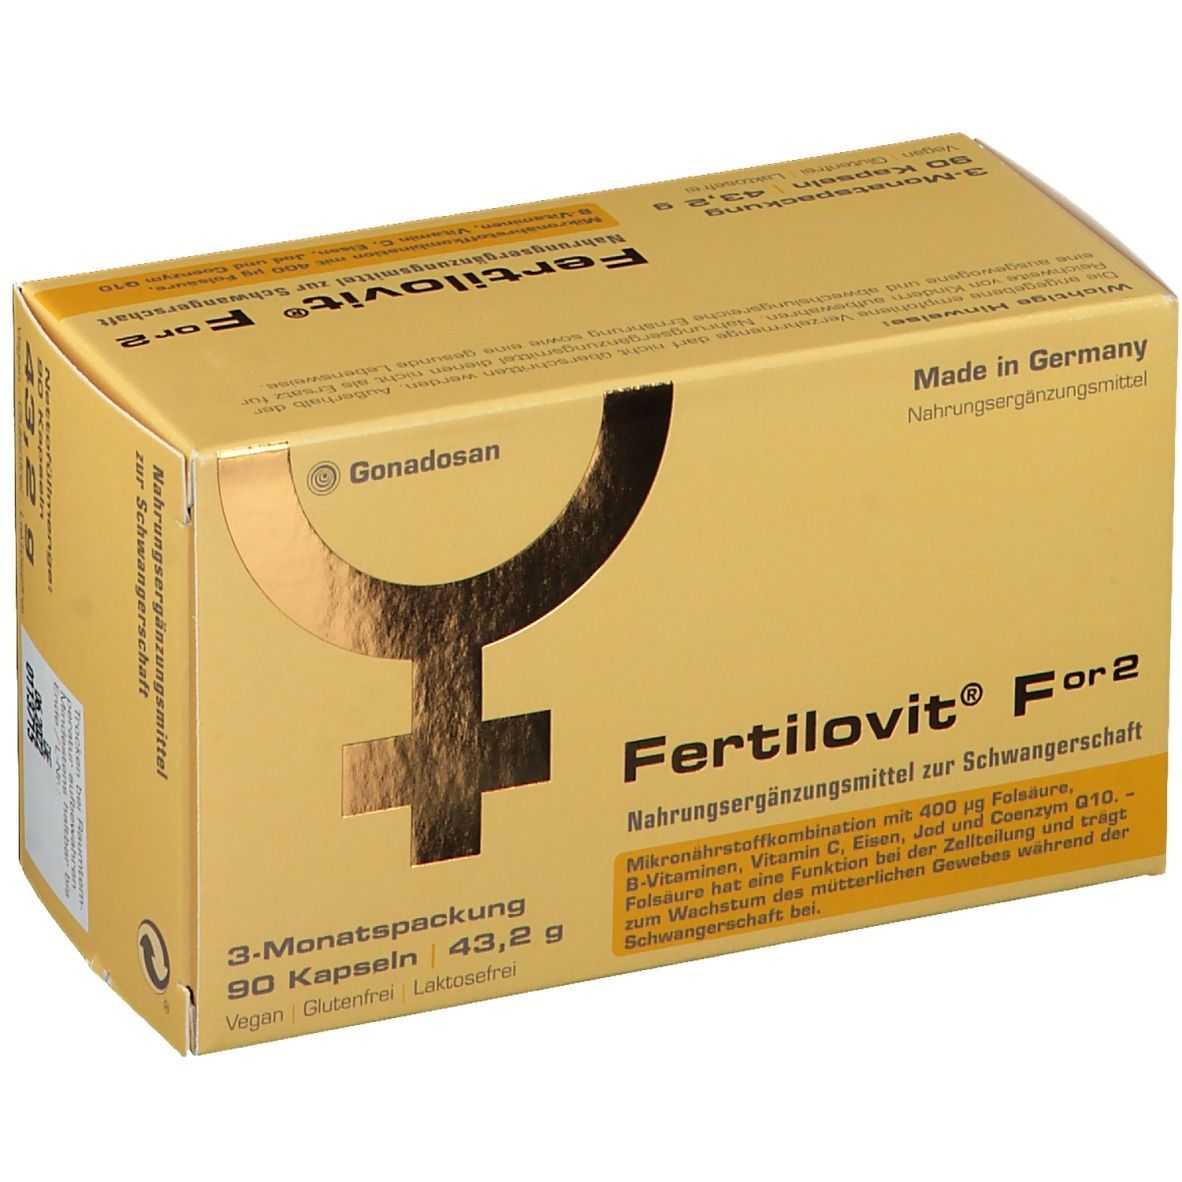 Fertilovit® F or 2